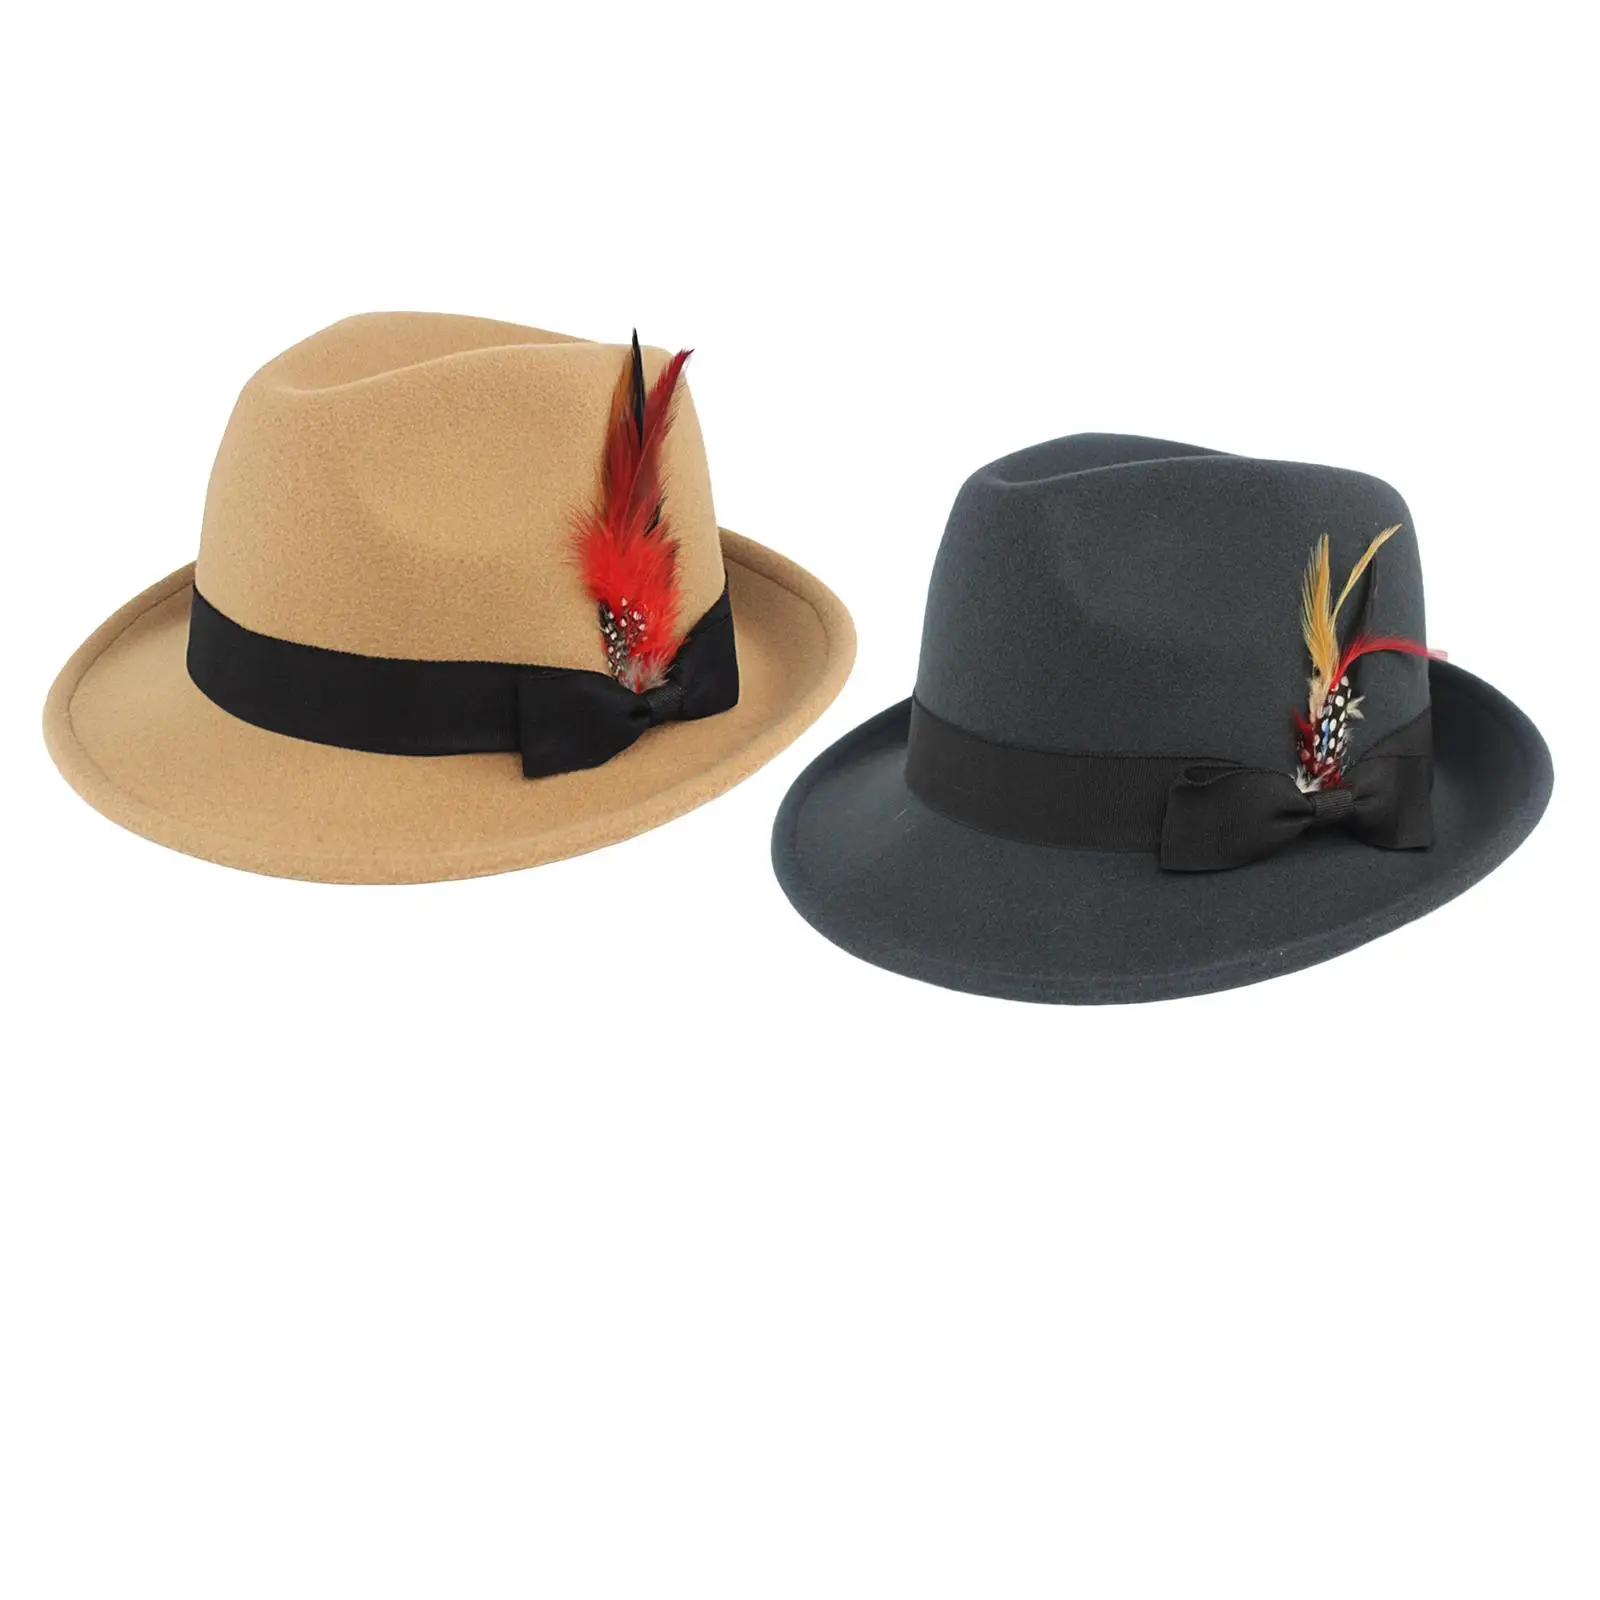 Unisex Panama Jazz Hat Short Brim Sunscreen Hat Fedora Hats for Men and Women Summer Beach Decorative Fancy Dress Accessories